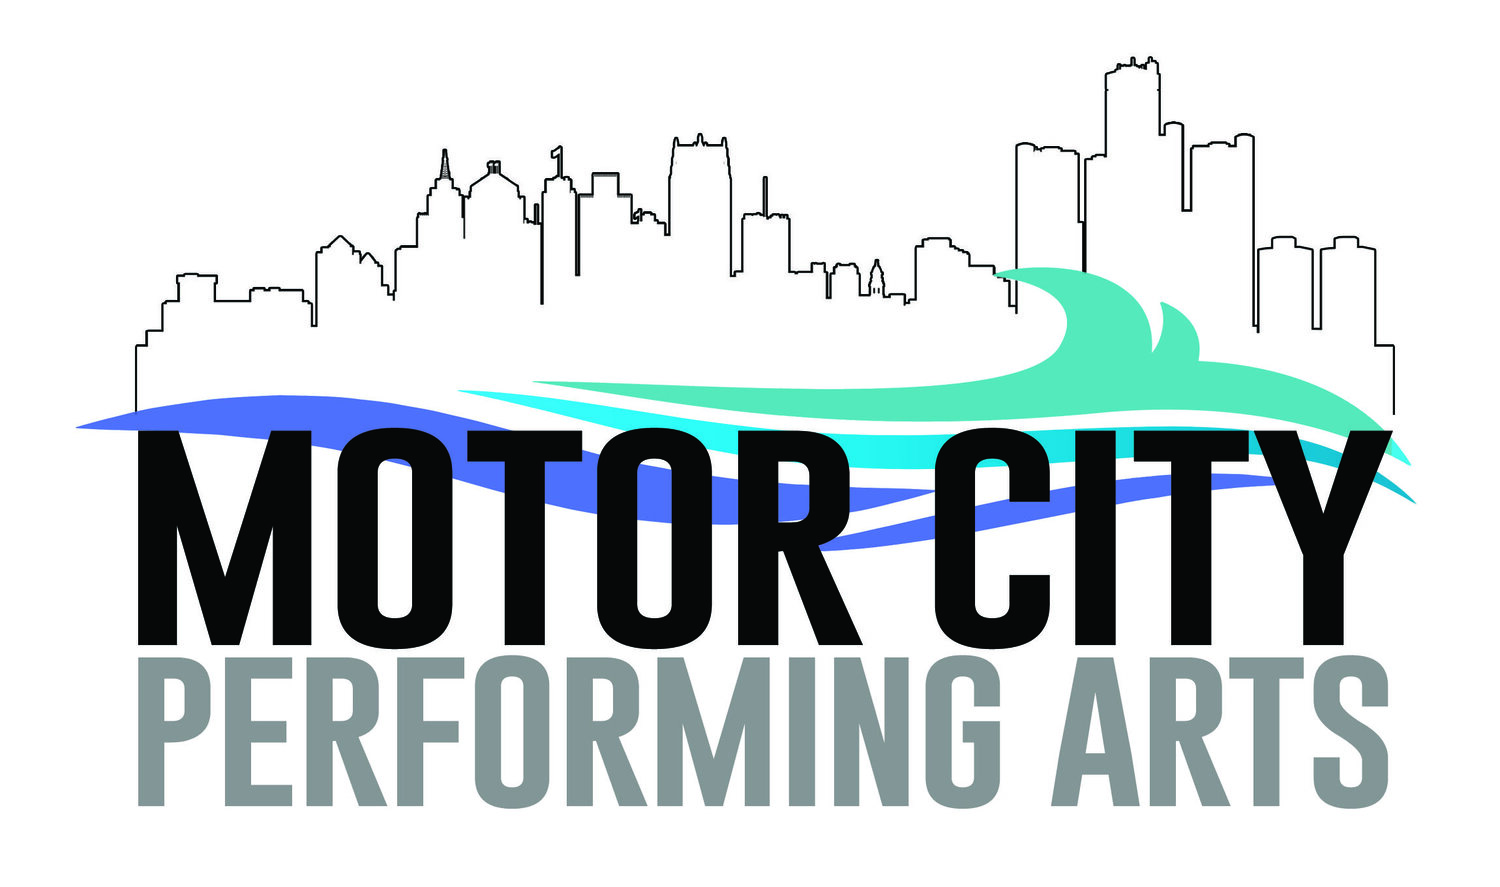 Motor City Performing Arts